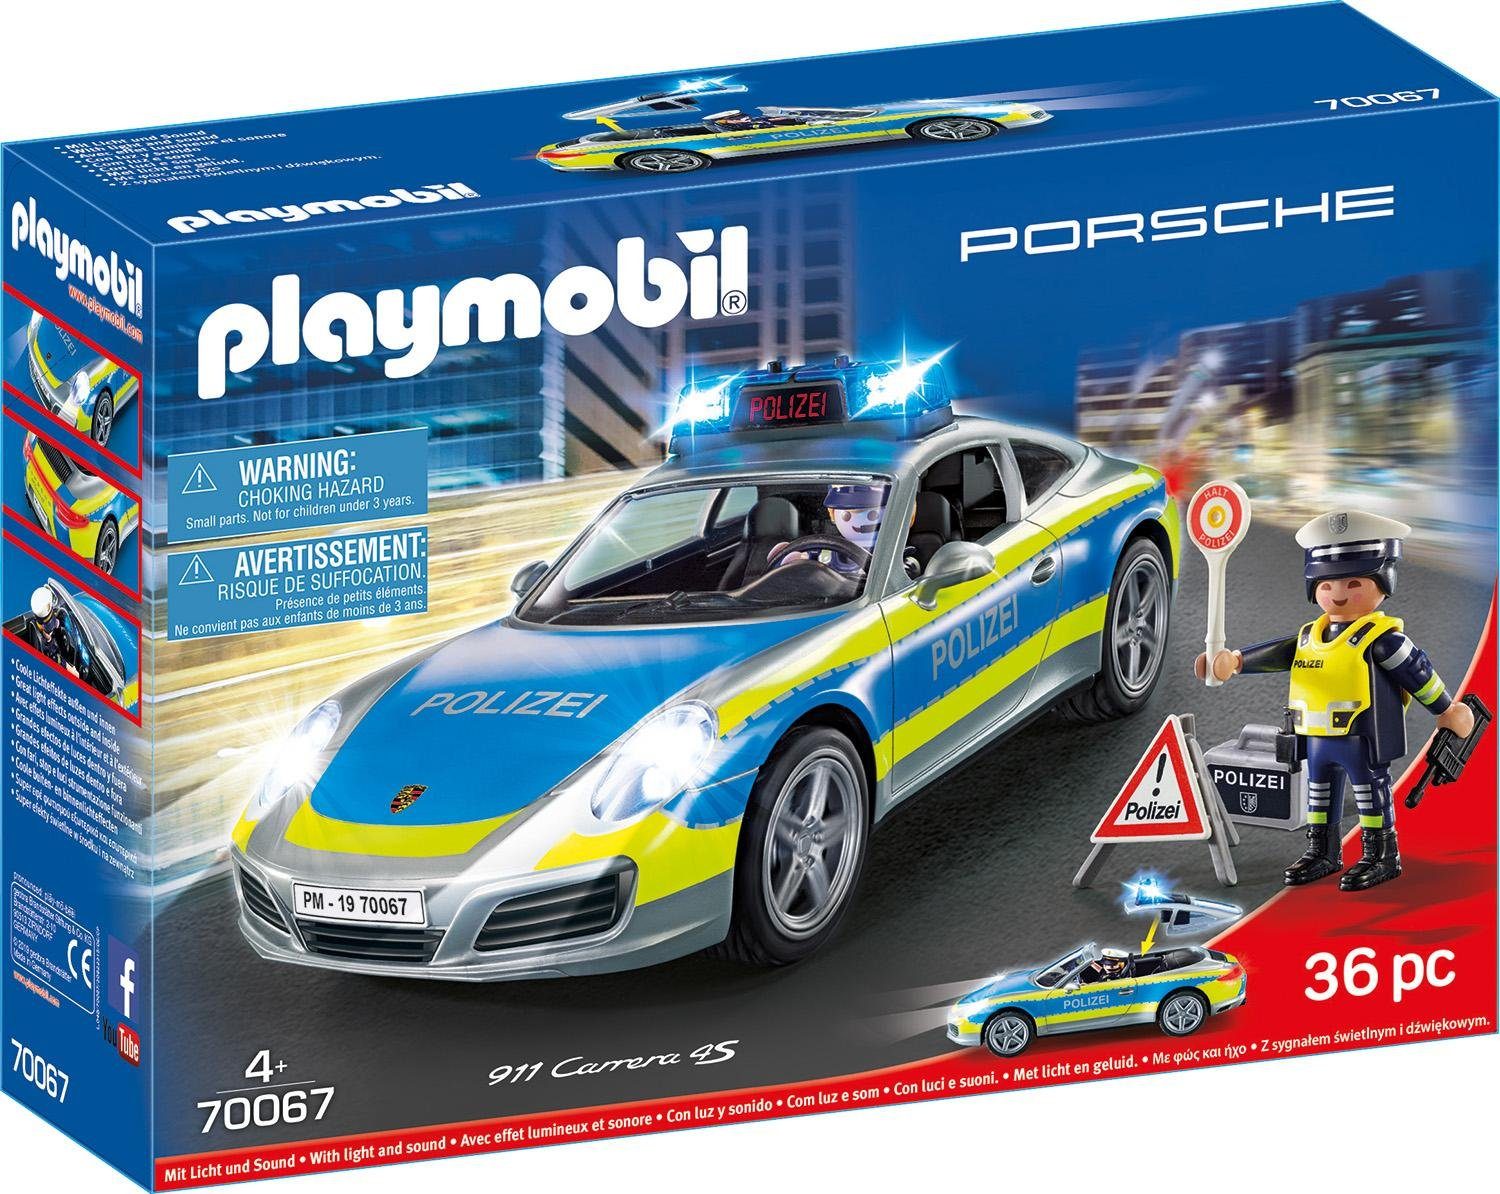 Playmobil® Konstruktions-Spielset Porsche Made in 911 (70067), (36 Germany Polizei 4S St), Action, City Carrera